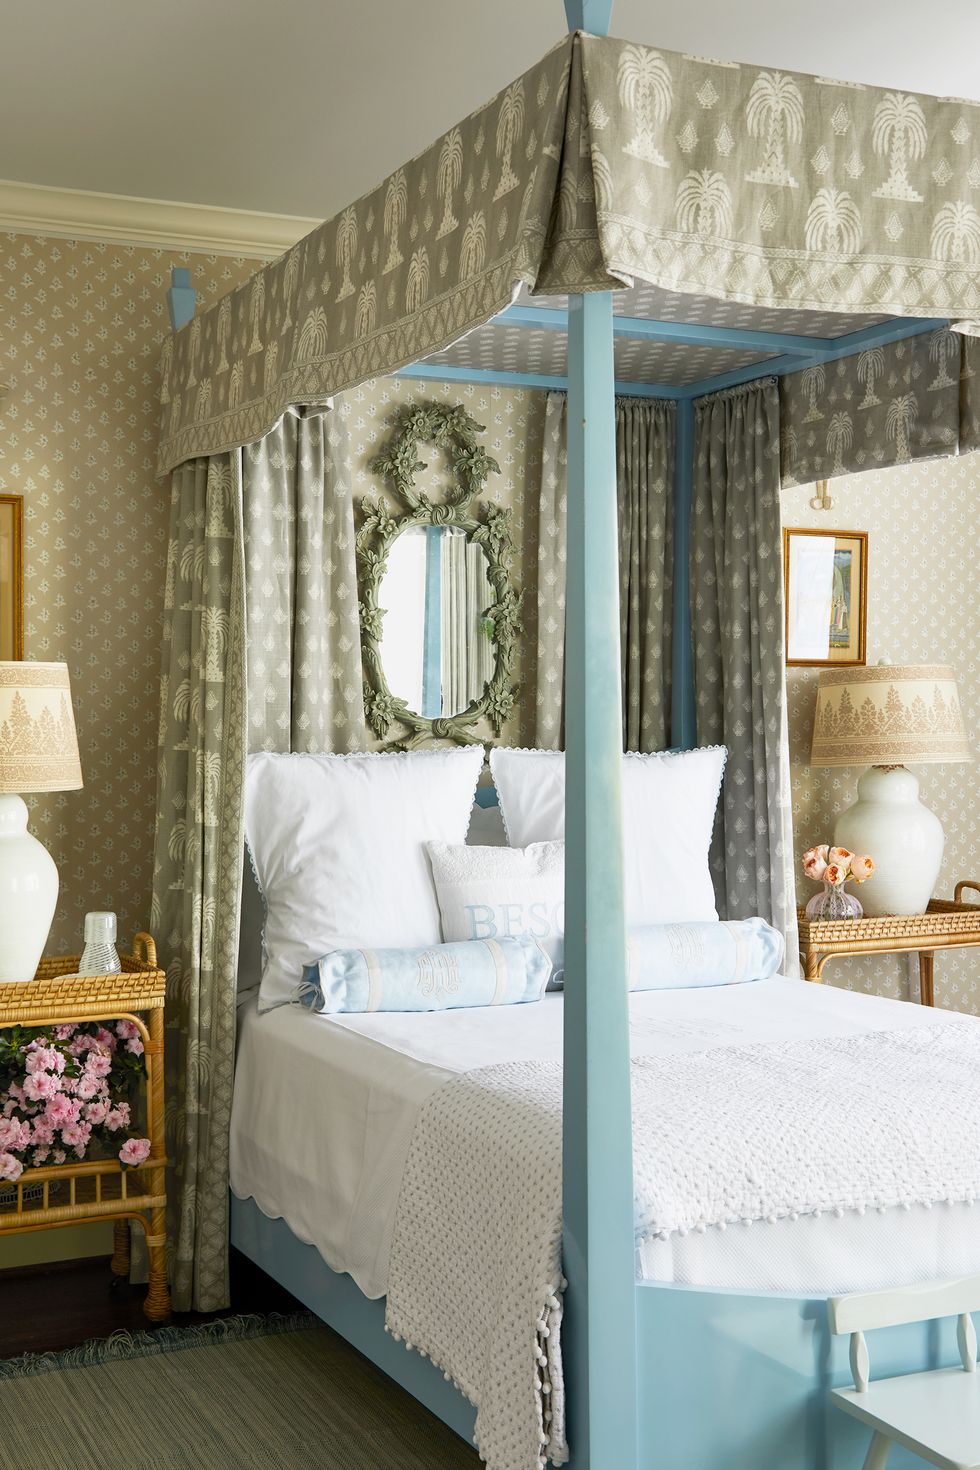 furniture, bed, bedroom, canopy bed, room, interior design, bed frame, property, bed sheet, four poster